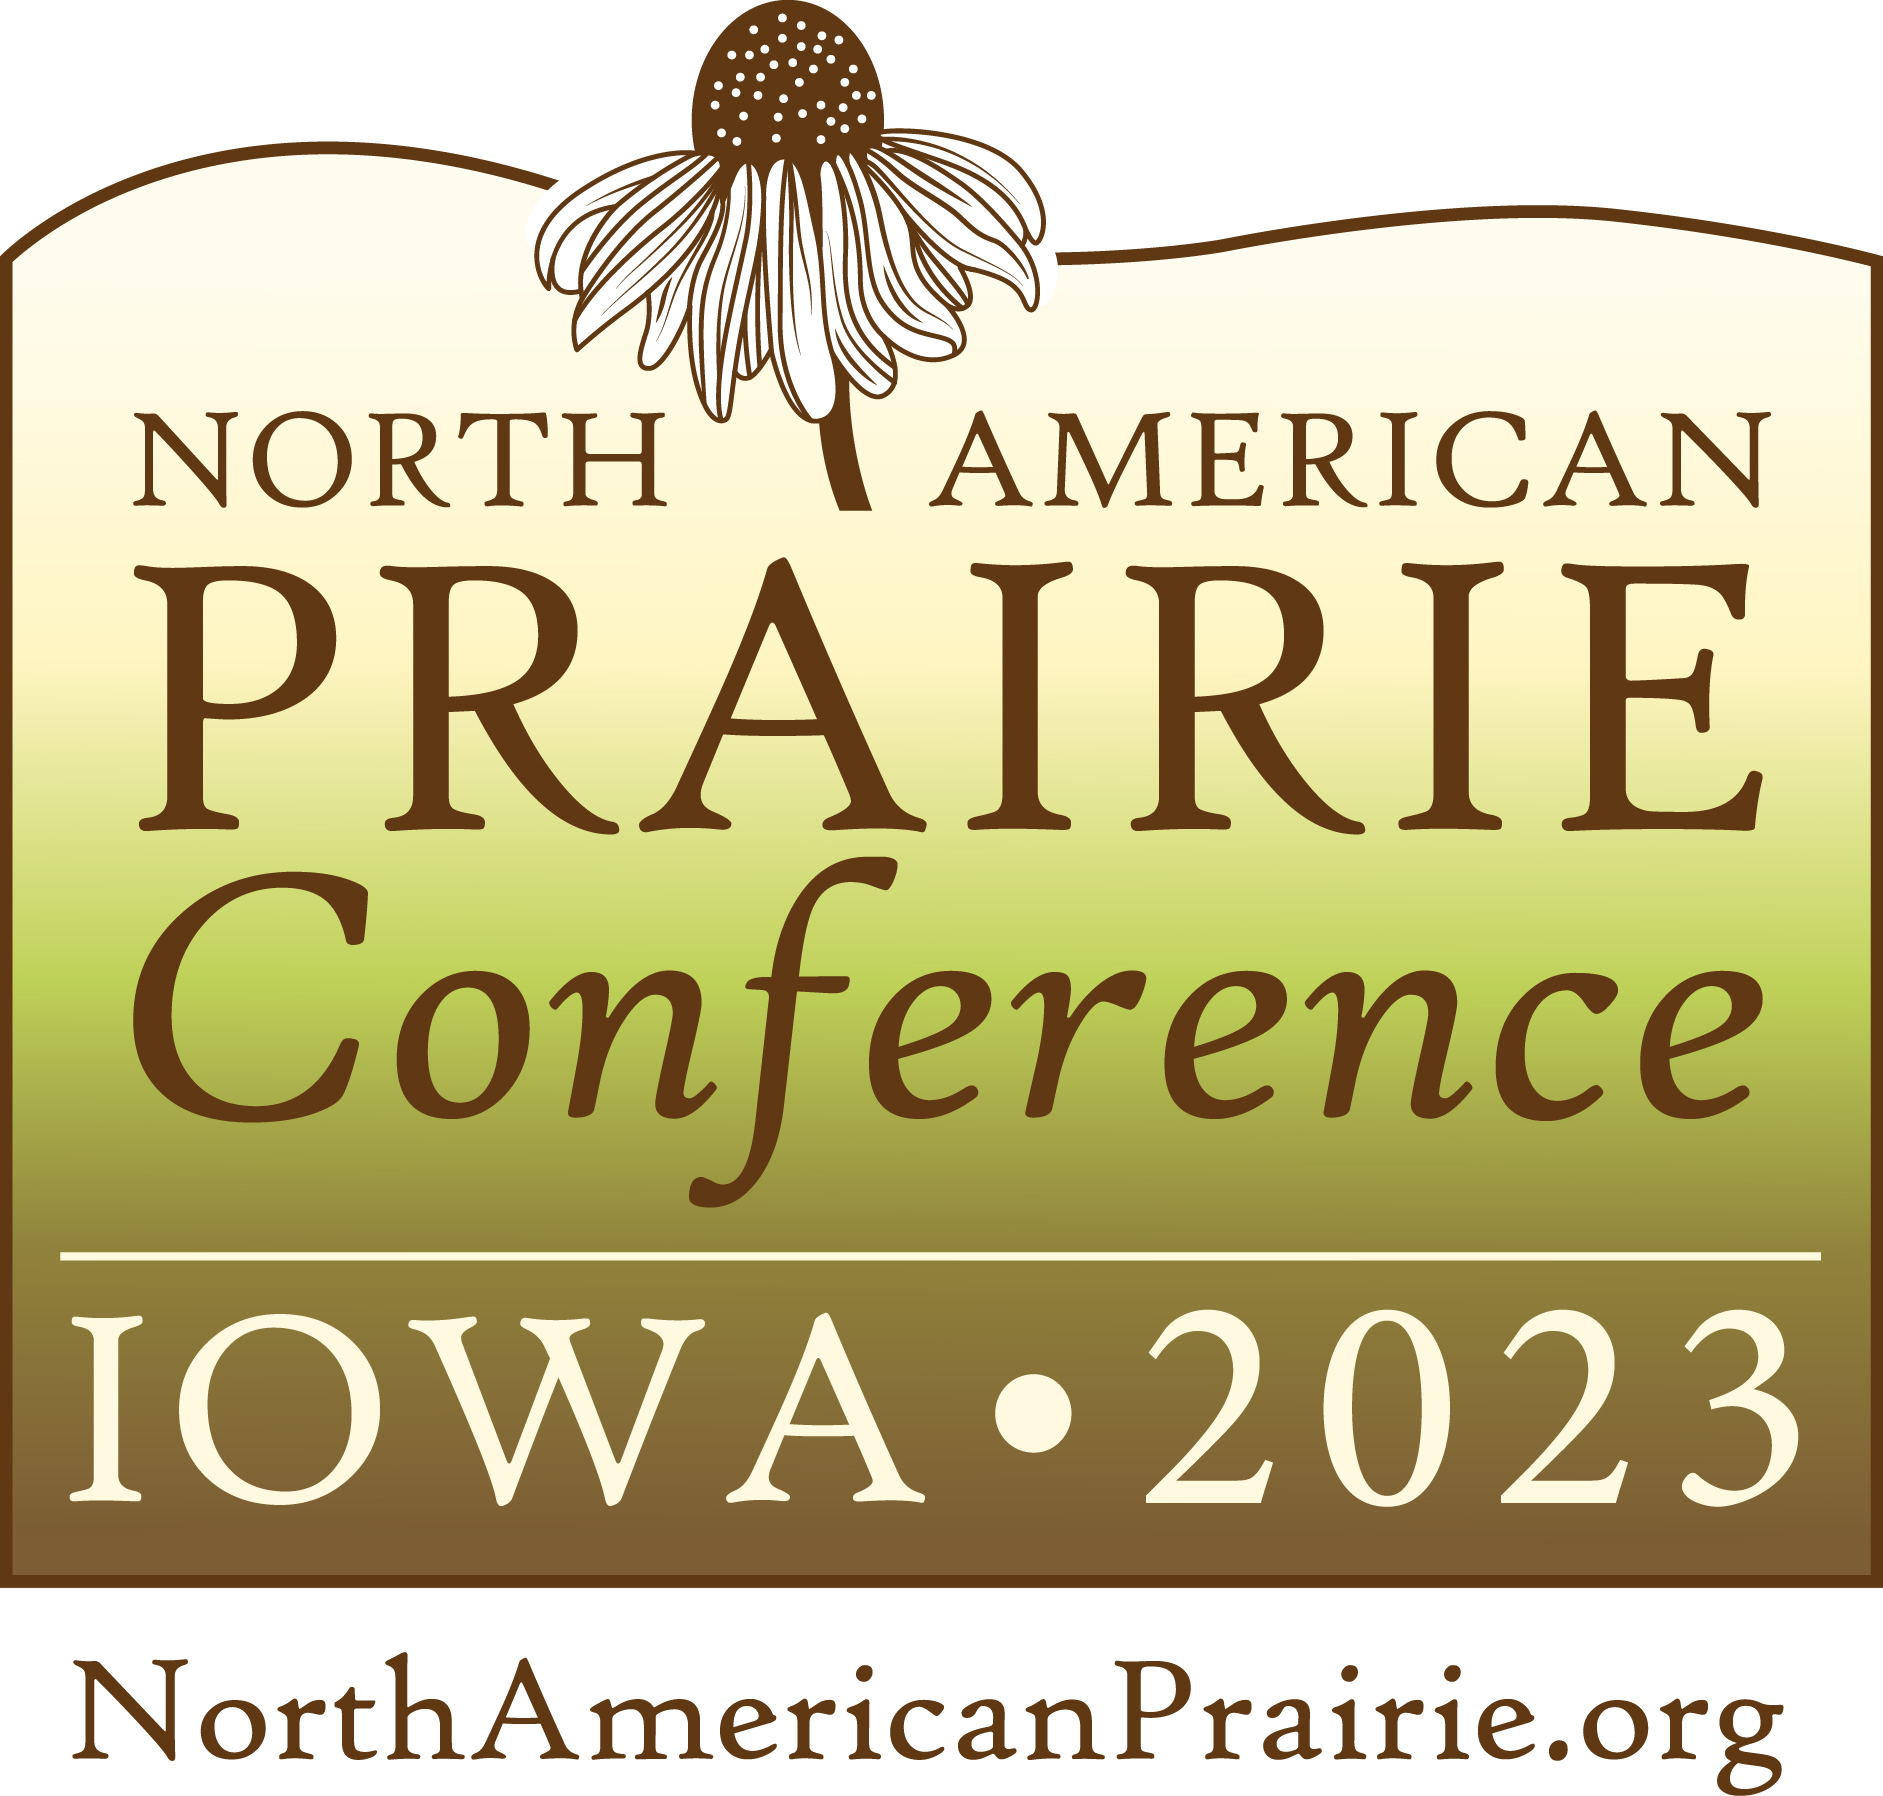 North American Prairie Conference returns to Iowa